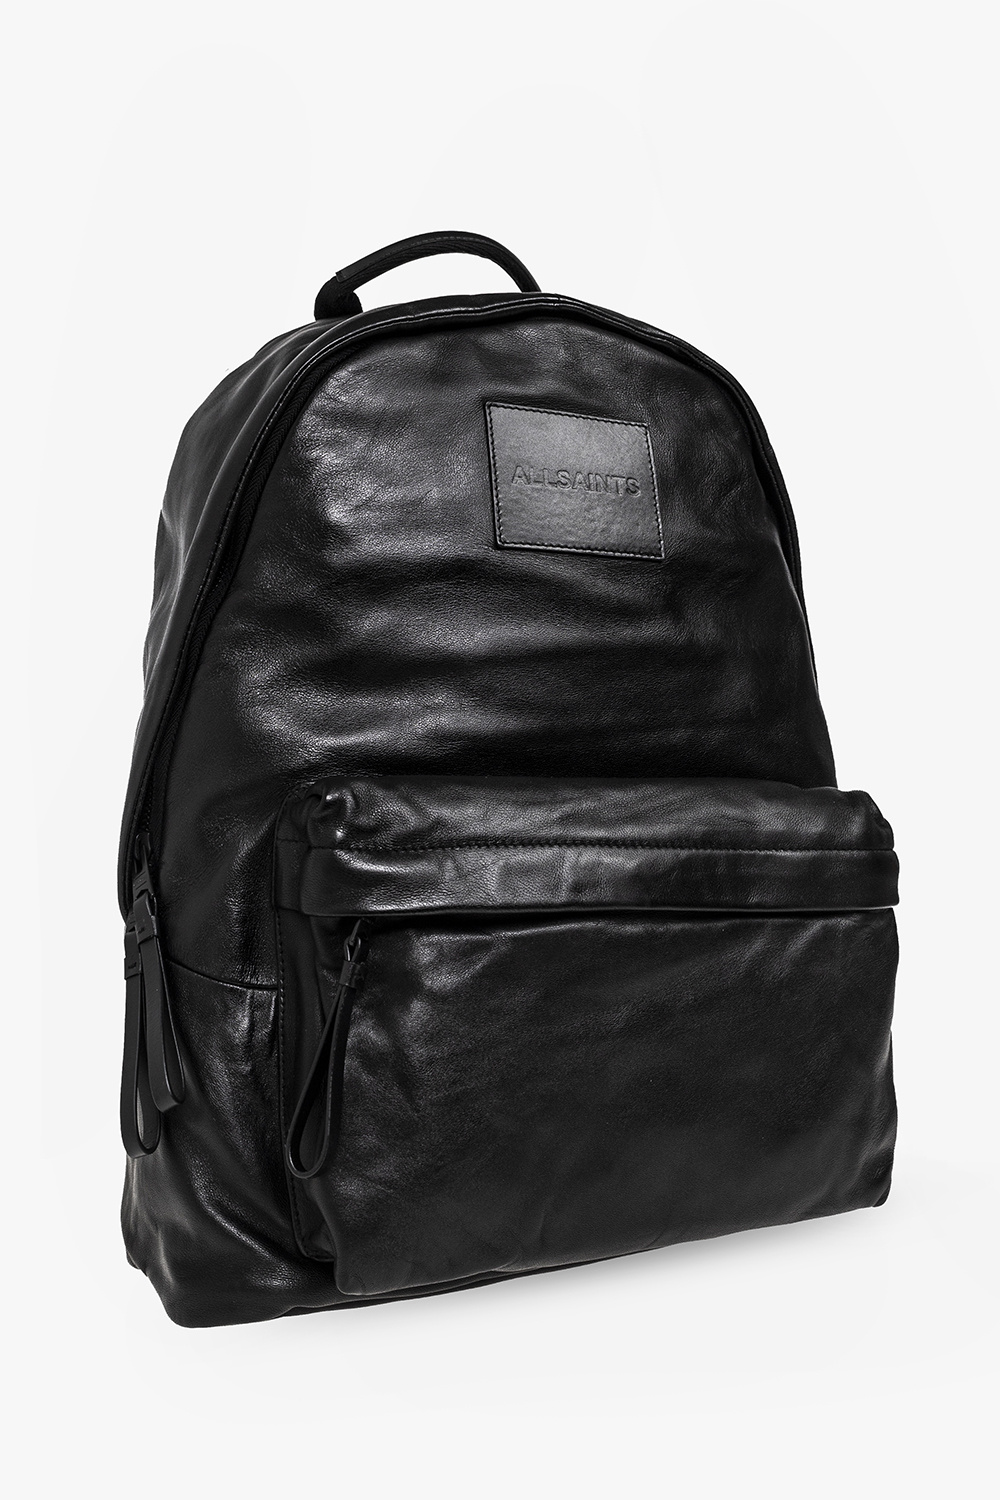 AllSaints 'Carabiner' leather backpack | Men's Bags | Vitkac